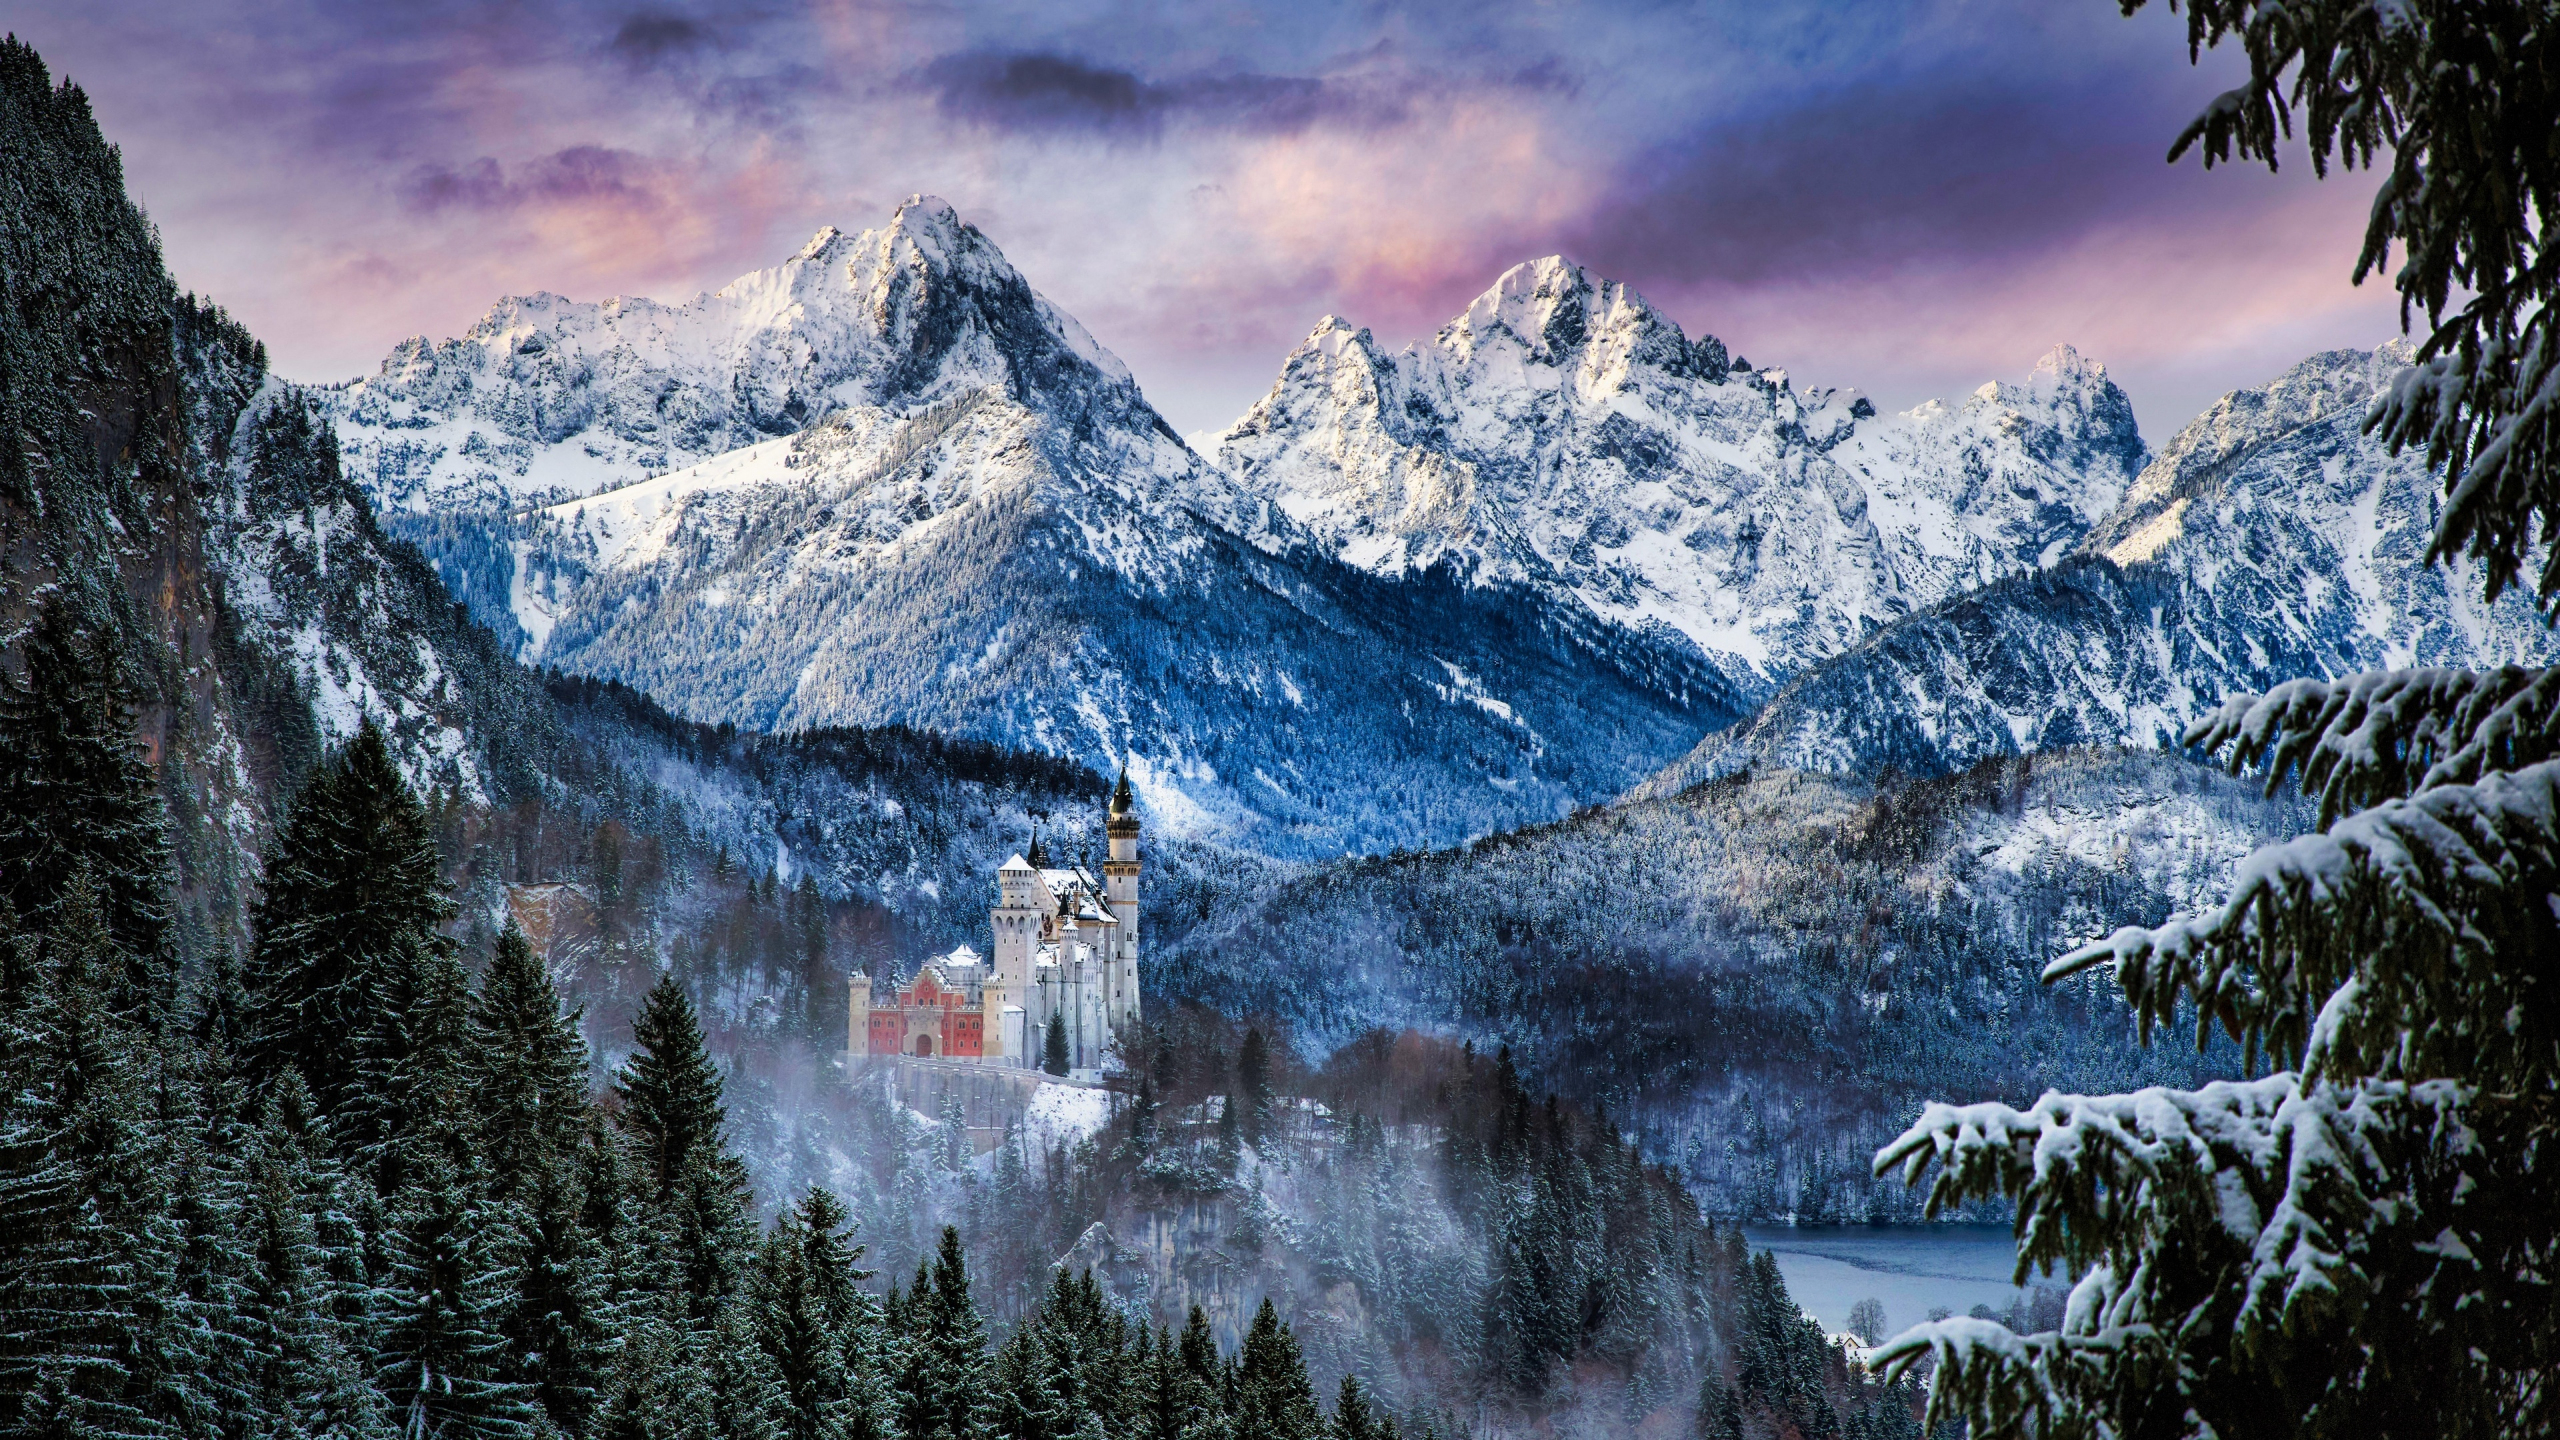 2560x1440 Download neuschwanstein castle, mountains, winter, nature wallpaper, dual wide 16:9 hd image, background, 27773